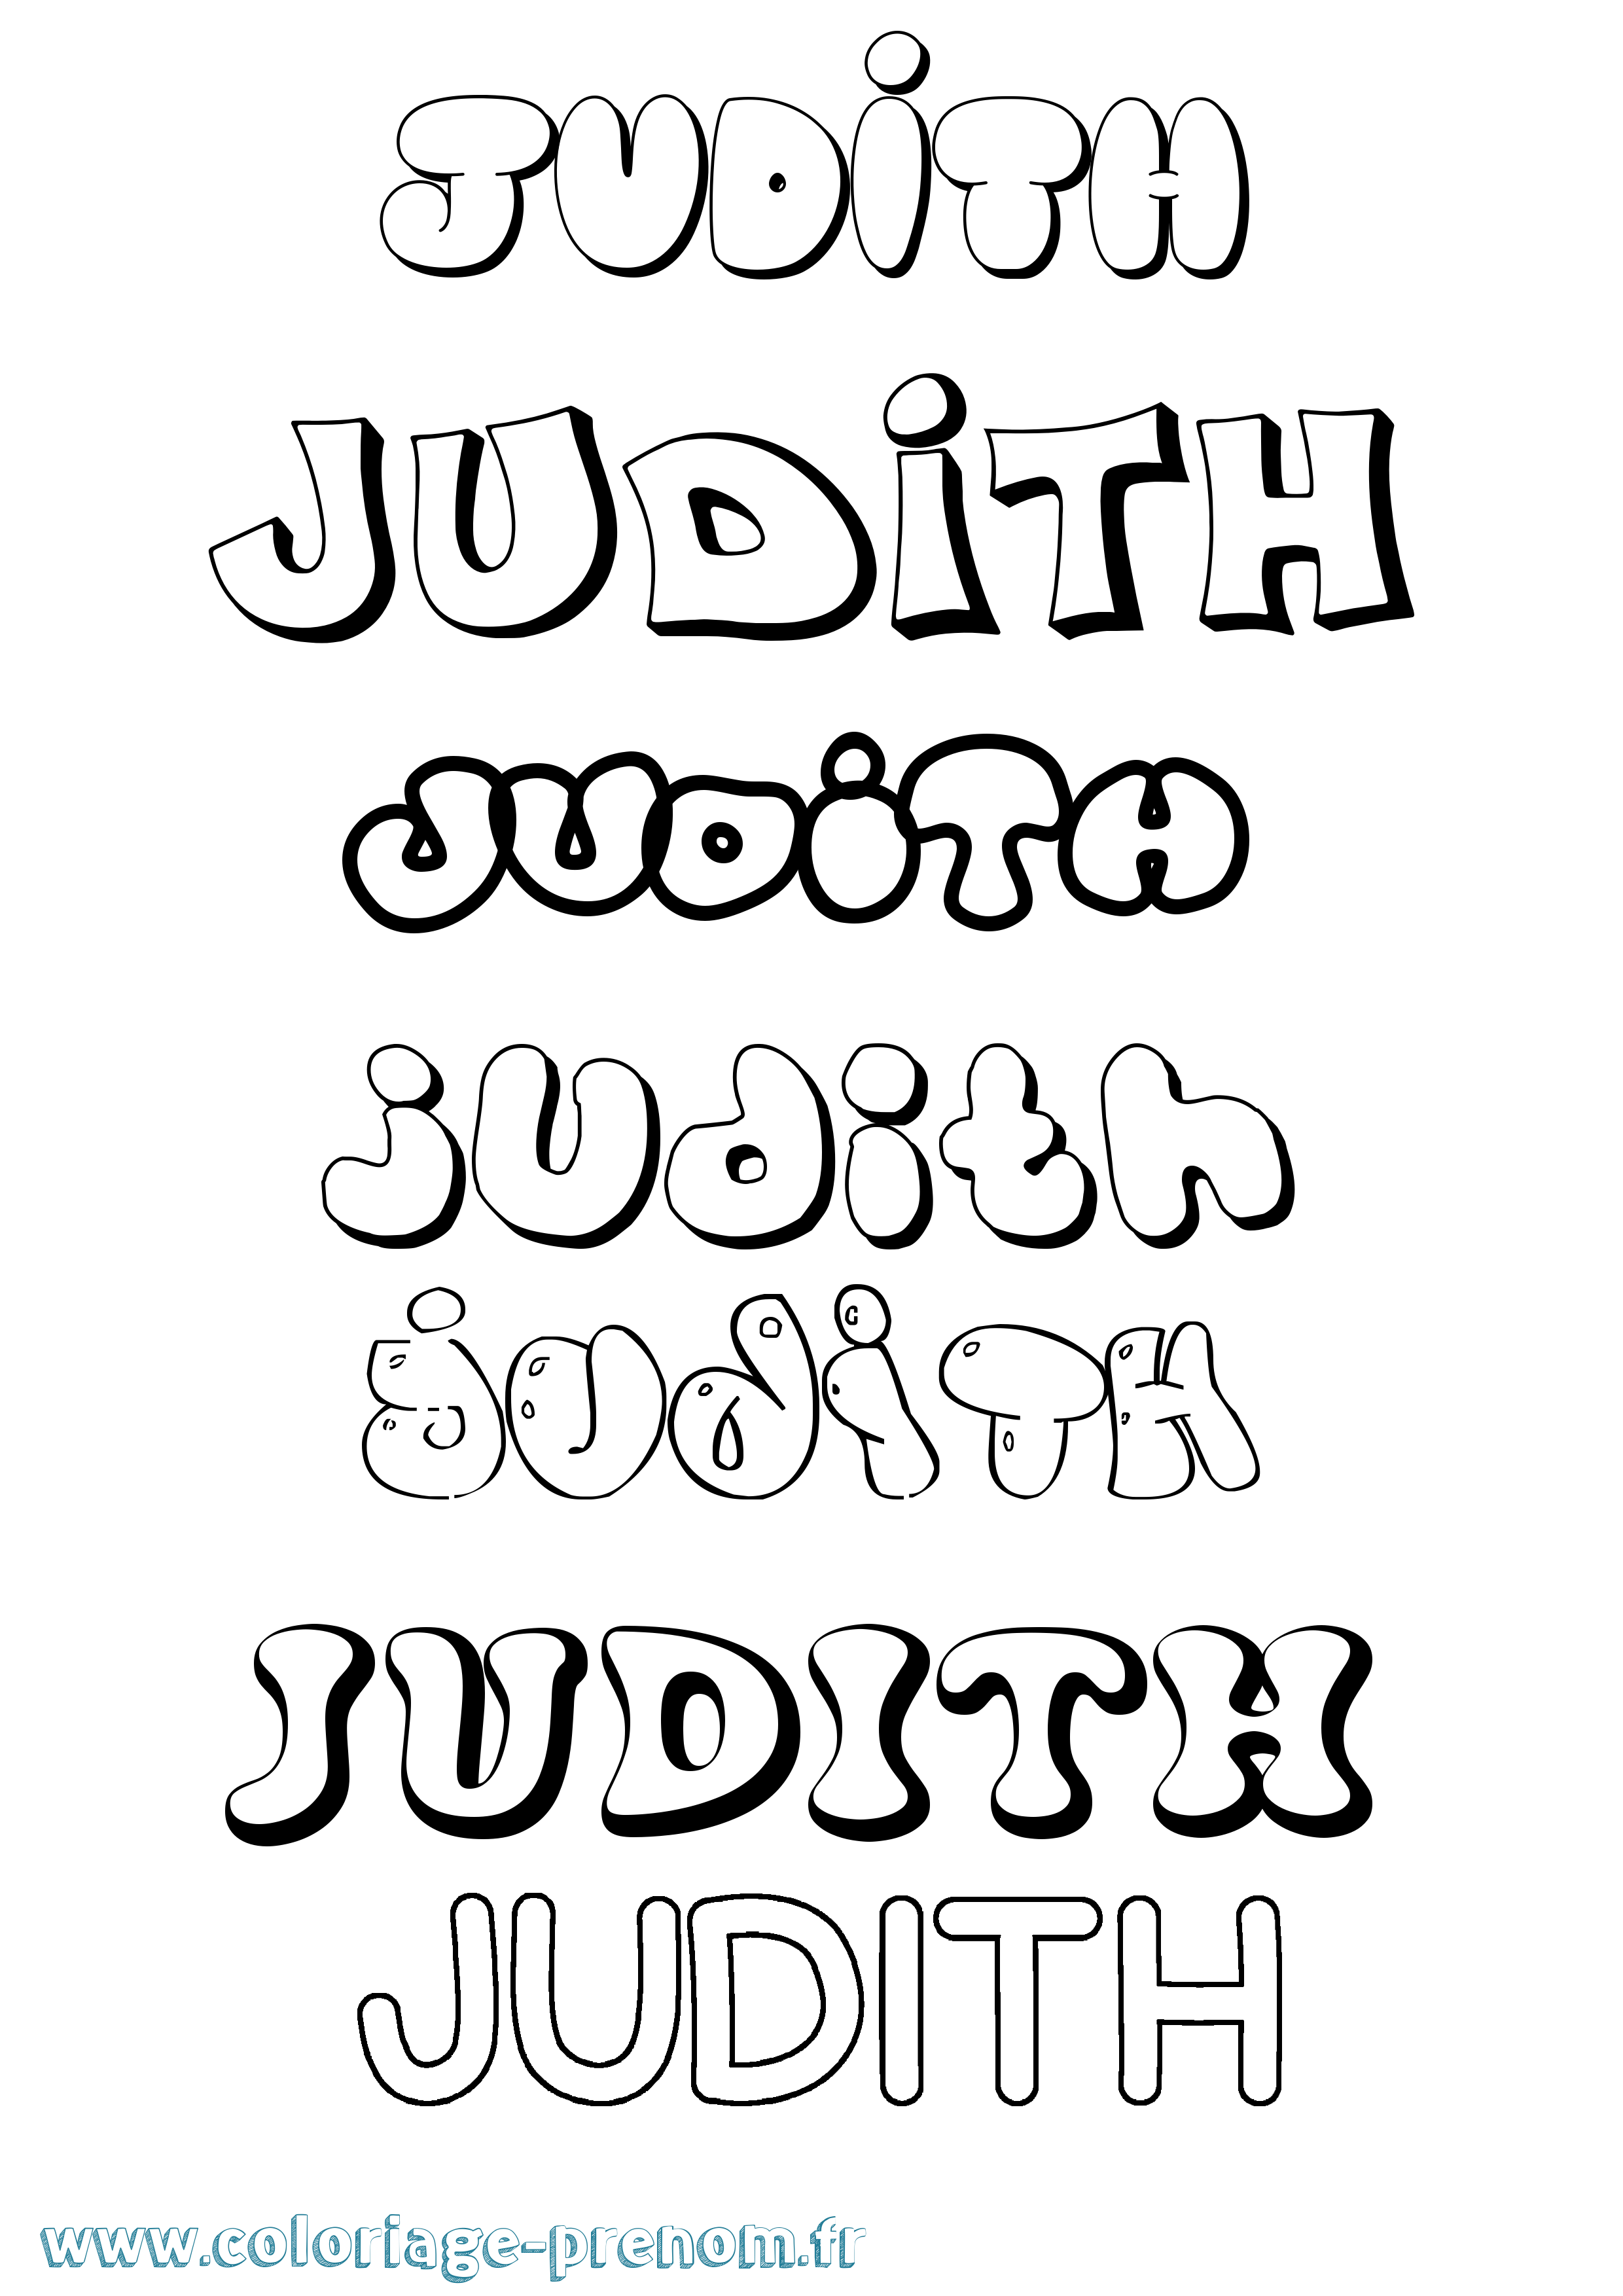 Coloriage prénom Judith Bubble